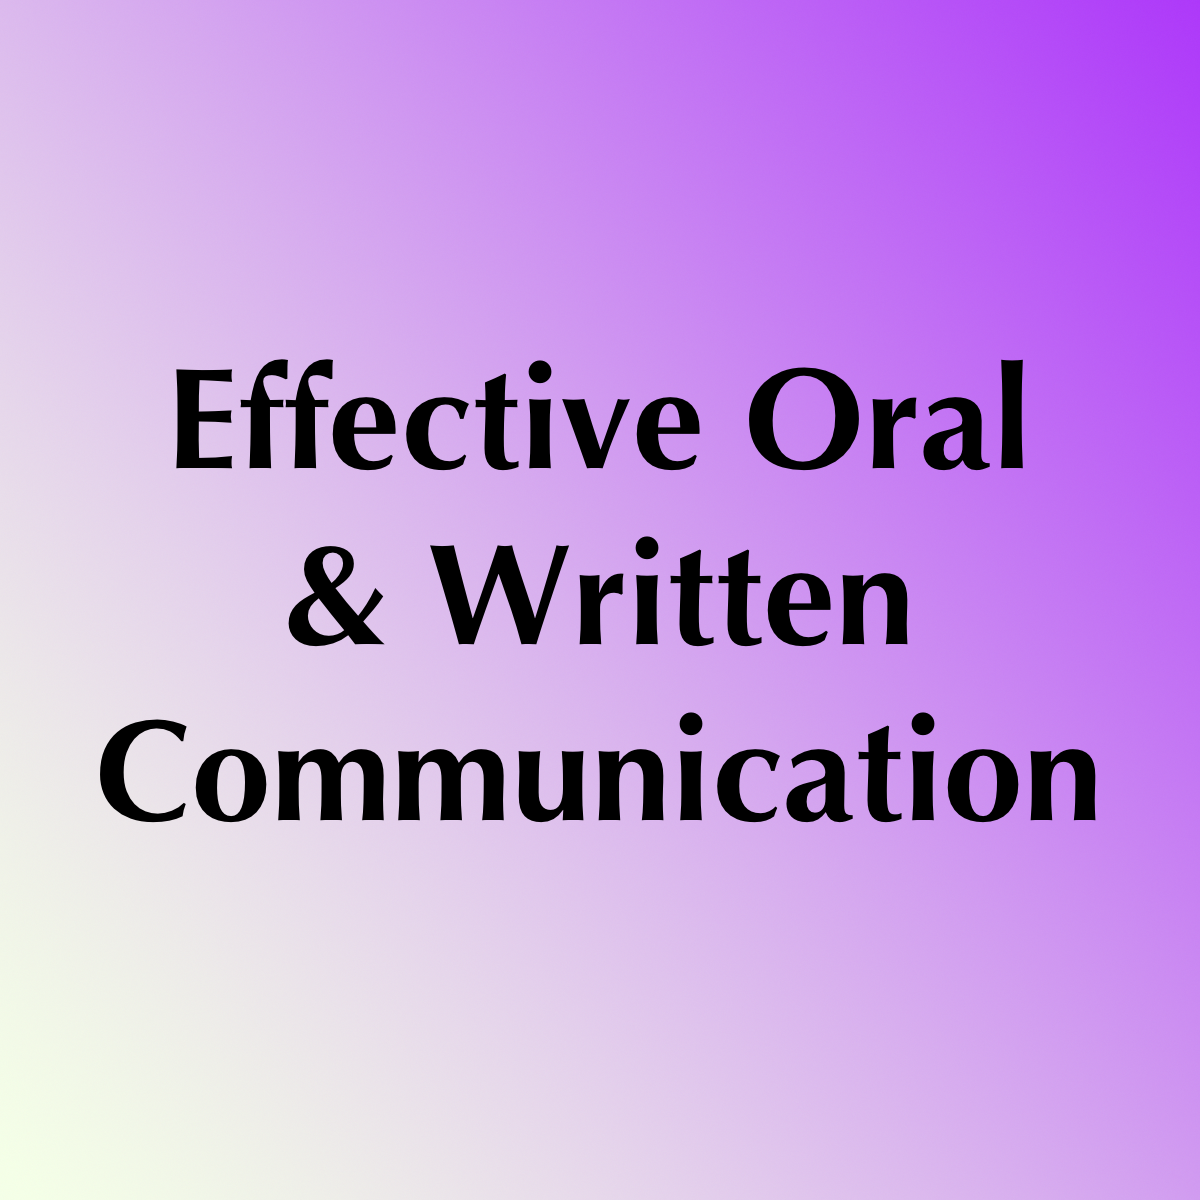 Effective Oral & Written Communication